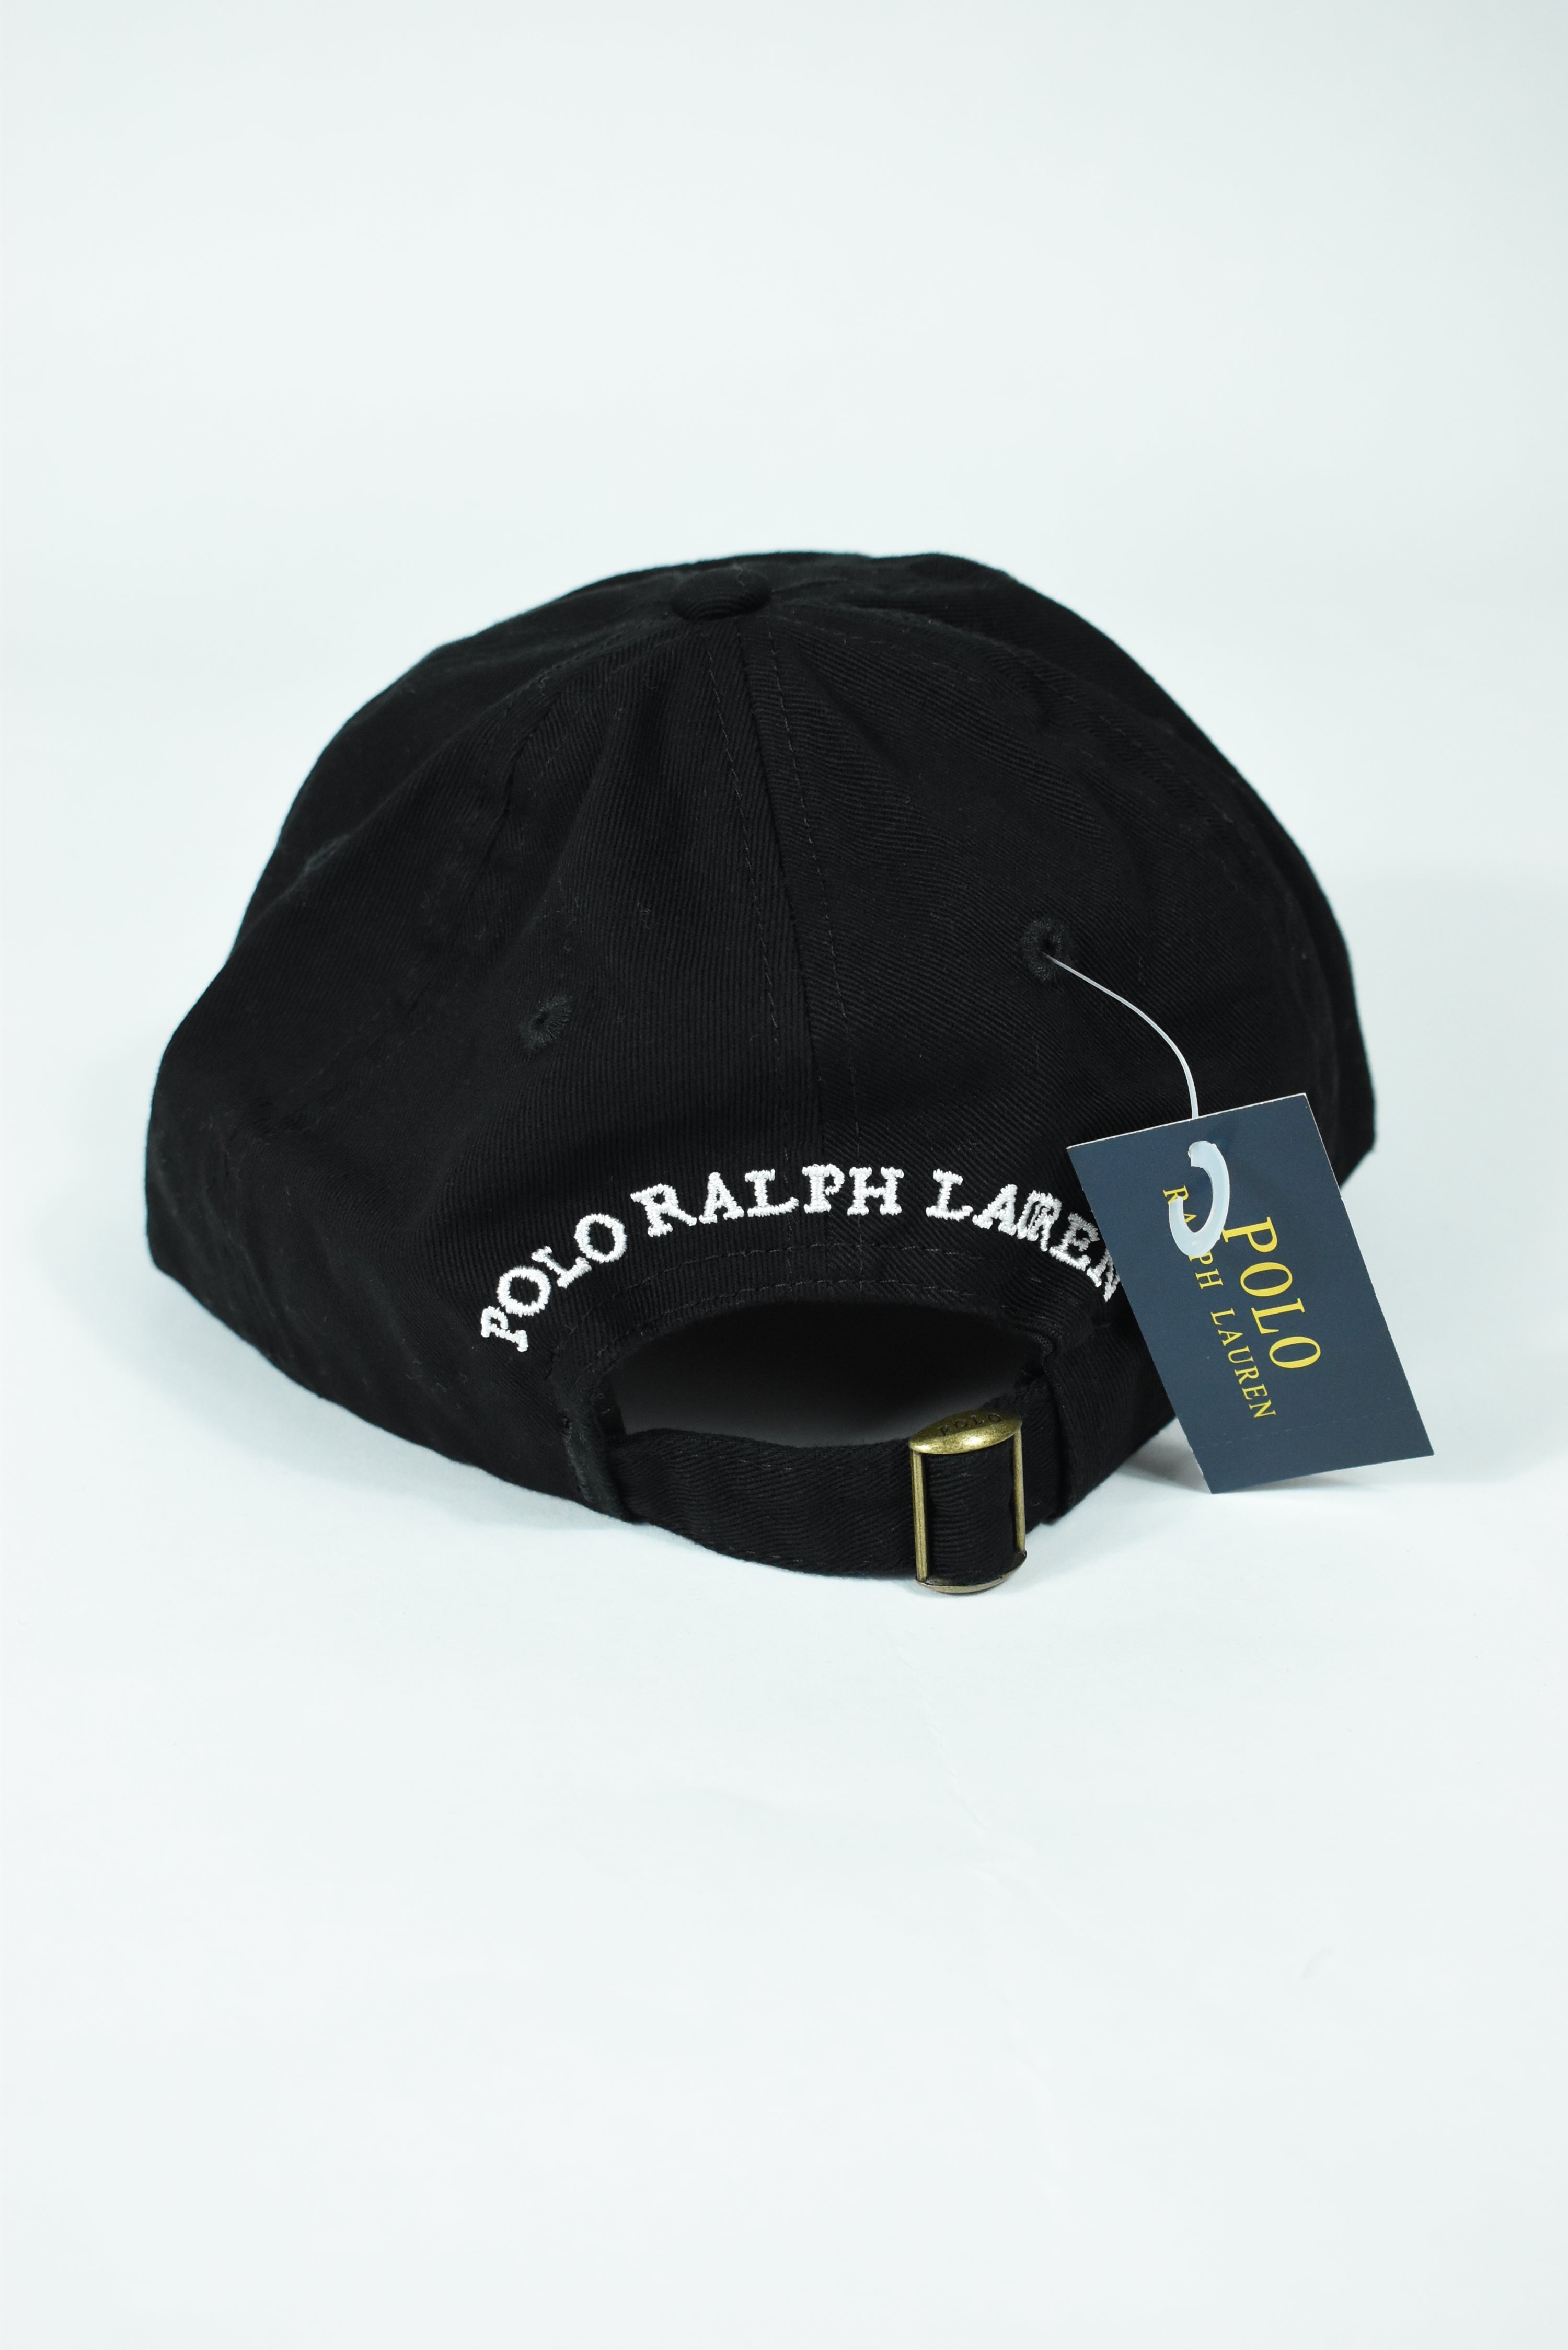 New Black RL Polo Bear Basketball Embroidery Cap